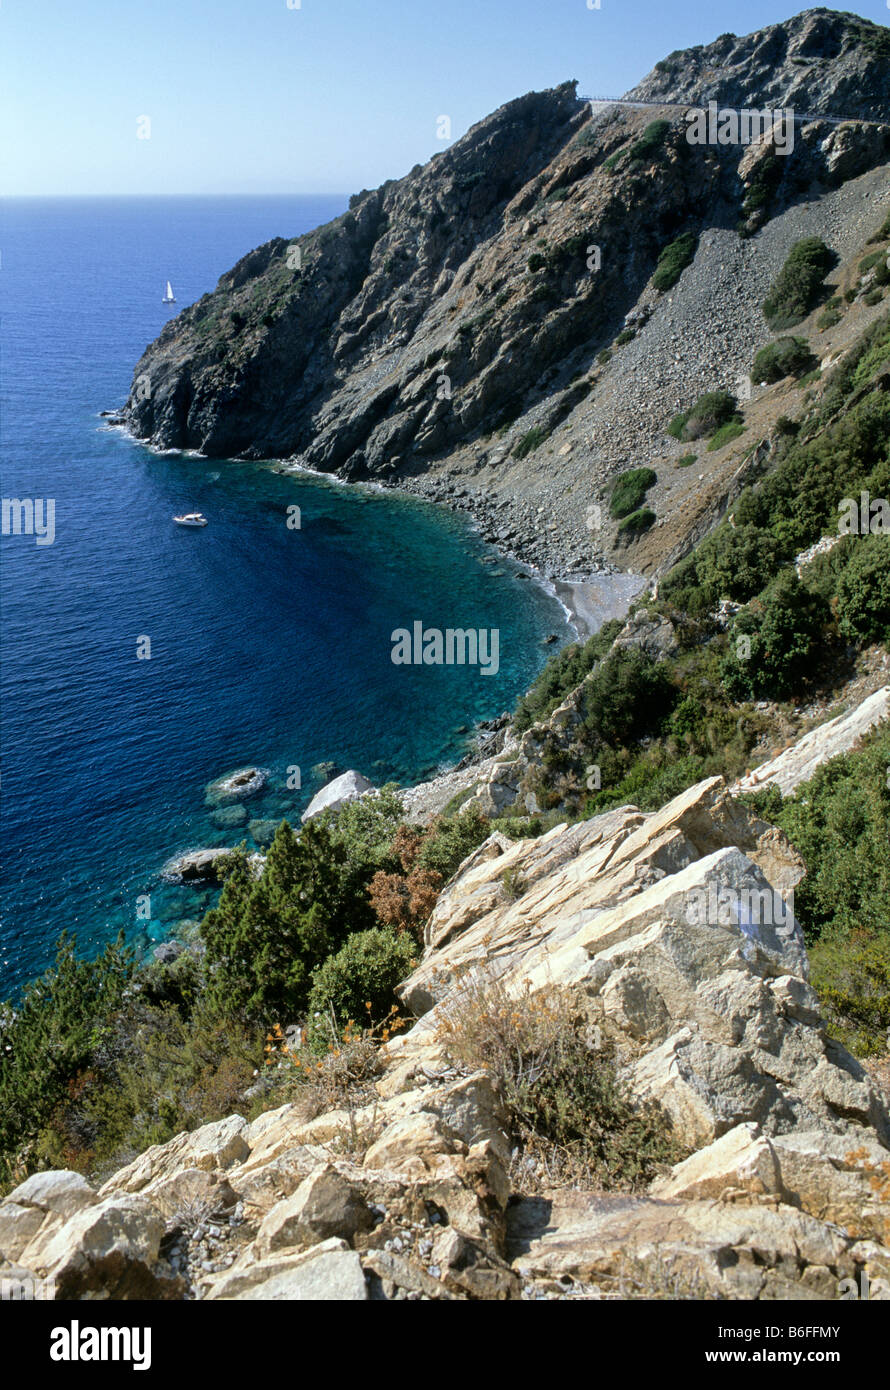 Punta Nera, Costa del Sole, Island of Elba, province of Livorno, Tuscany, Itlaly, Europe Stock Photo